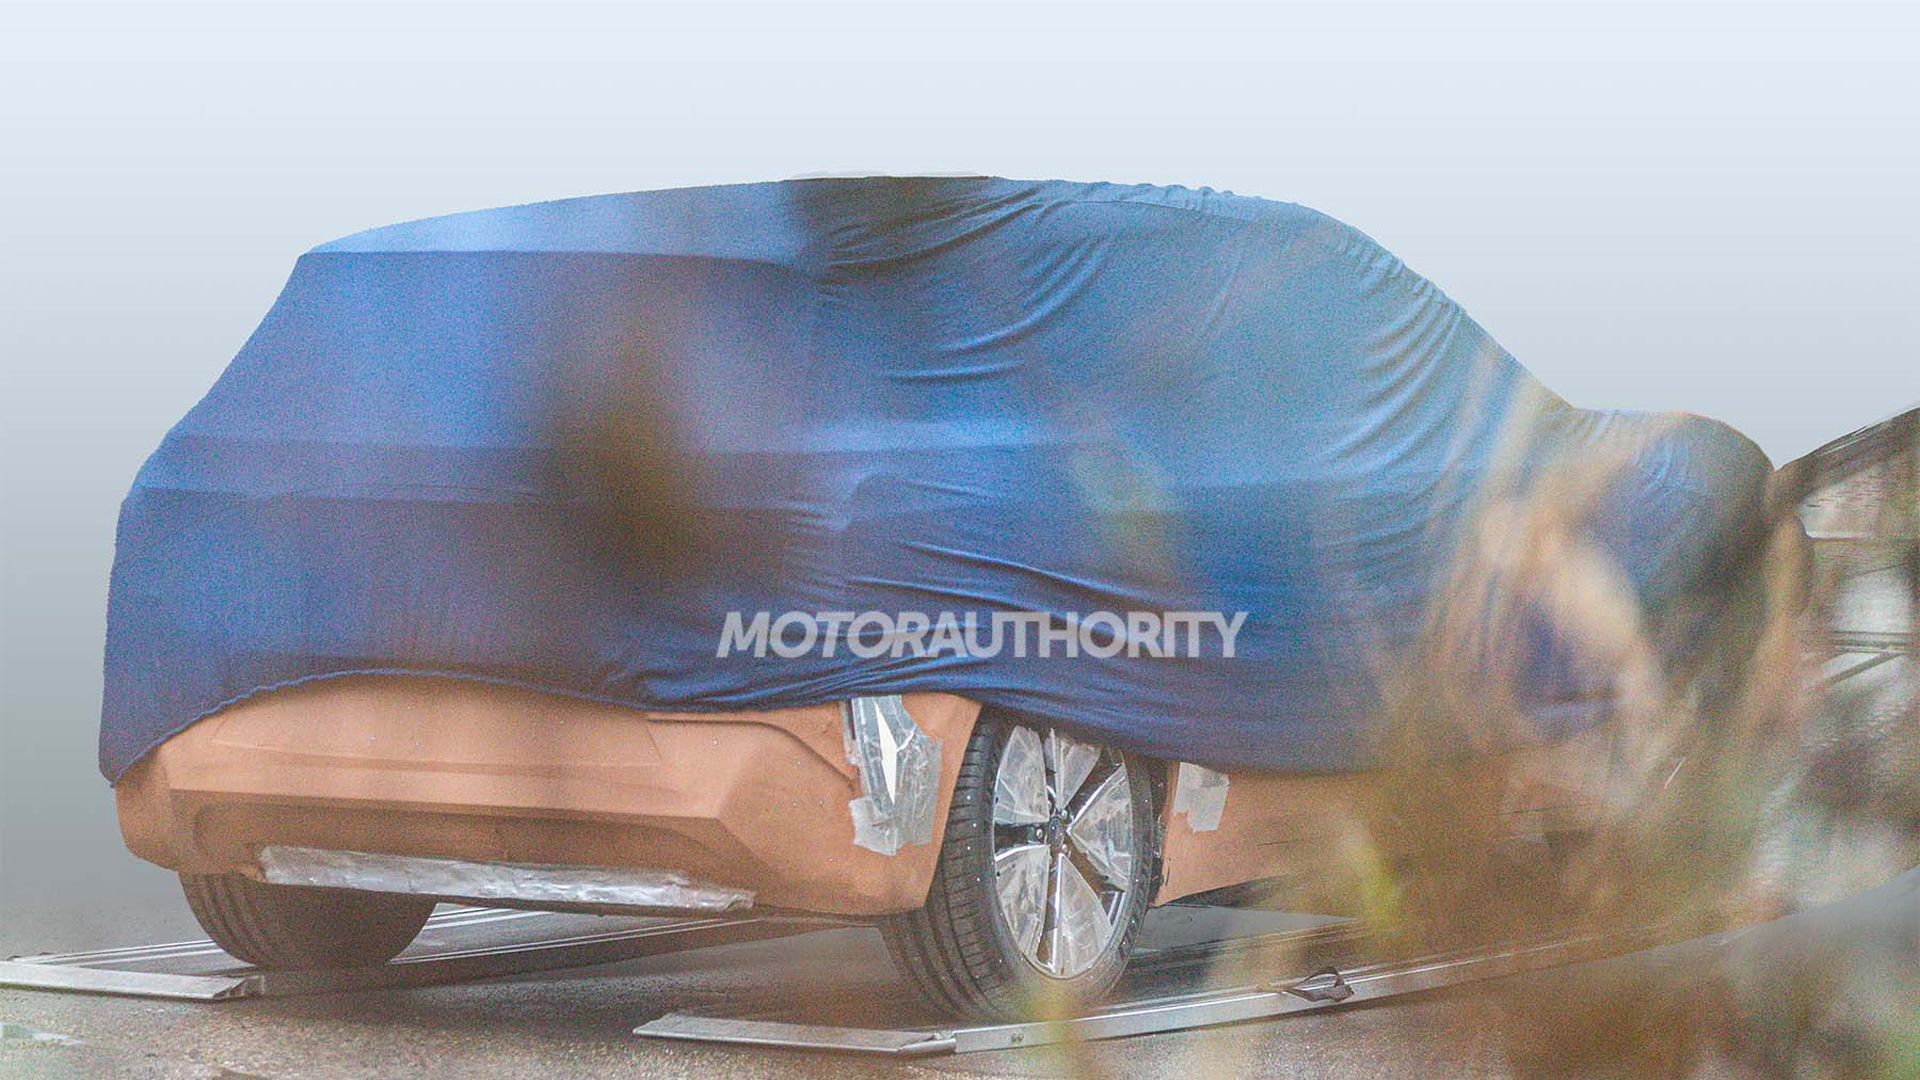 2023 Ford MEB-based electric crossover spy shots - Photo credit: S. Baldauf/SB-Medien